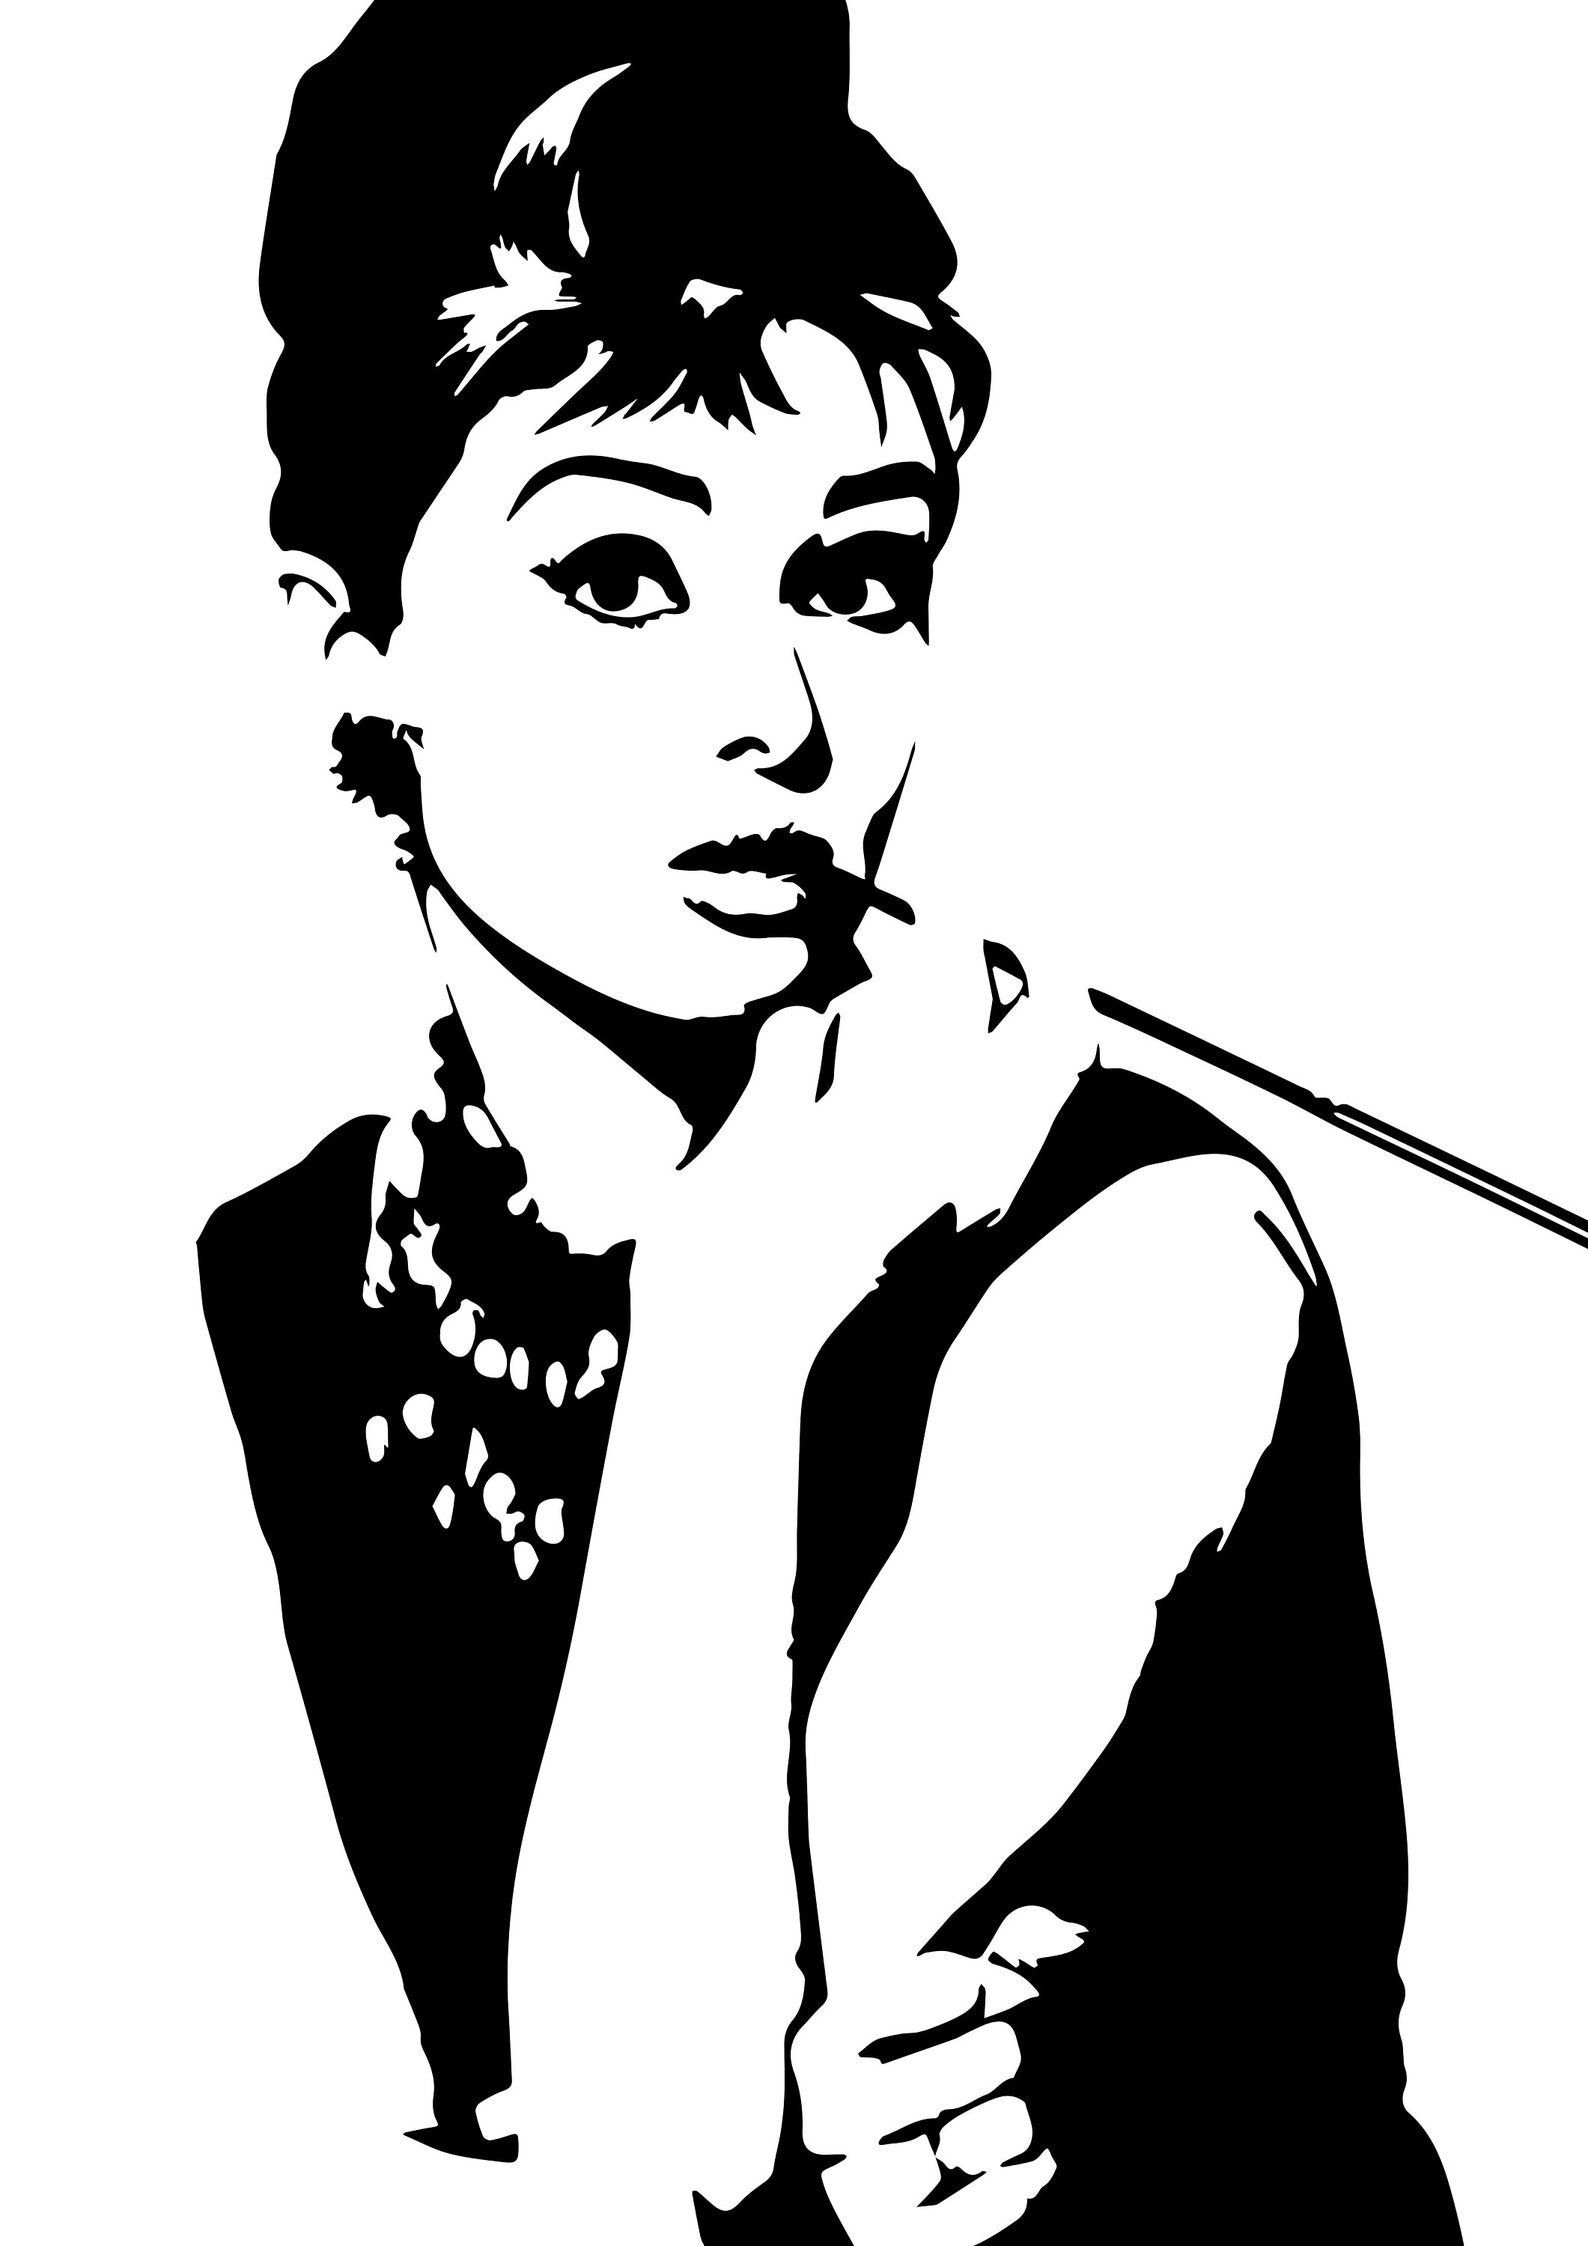 Audrey Hepburn silhouette | Etsy